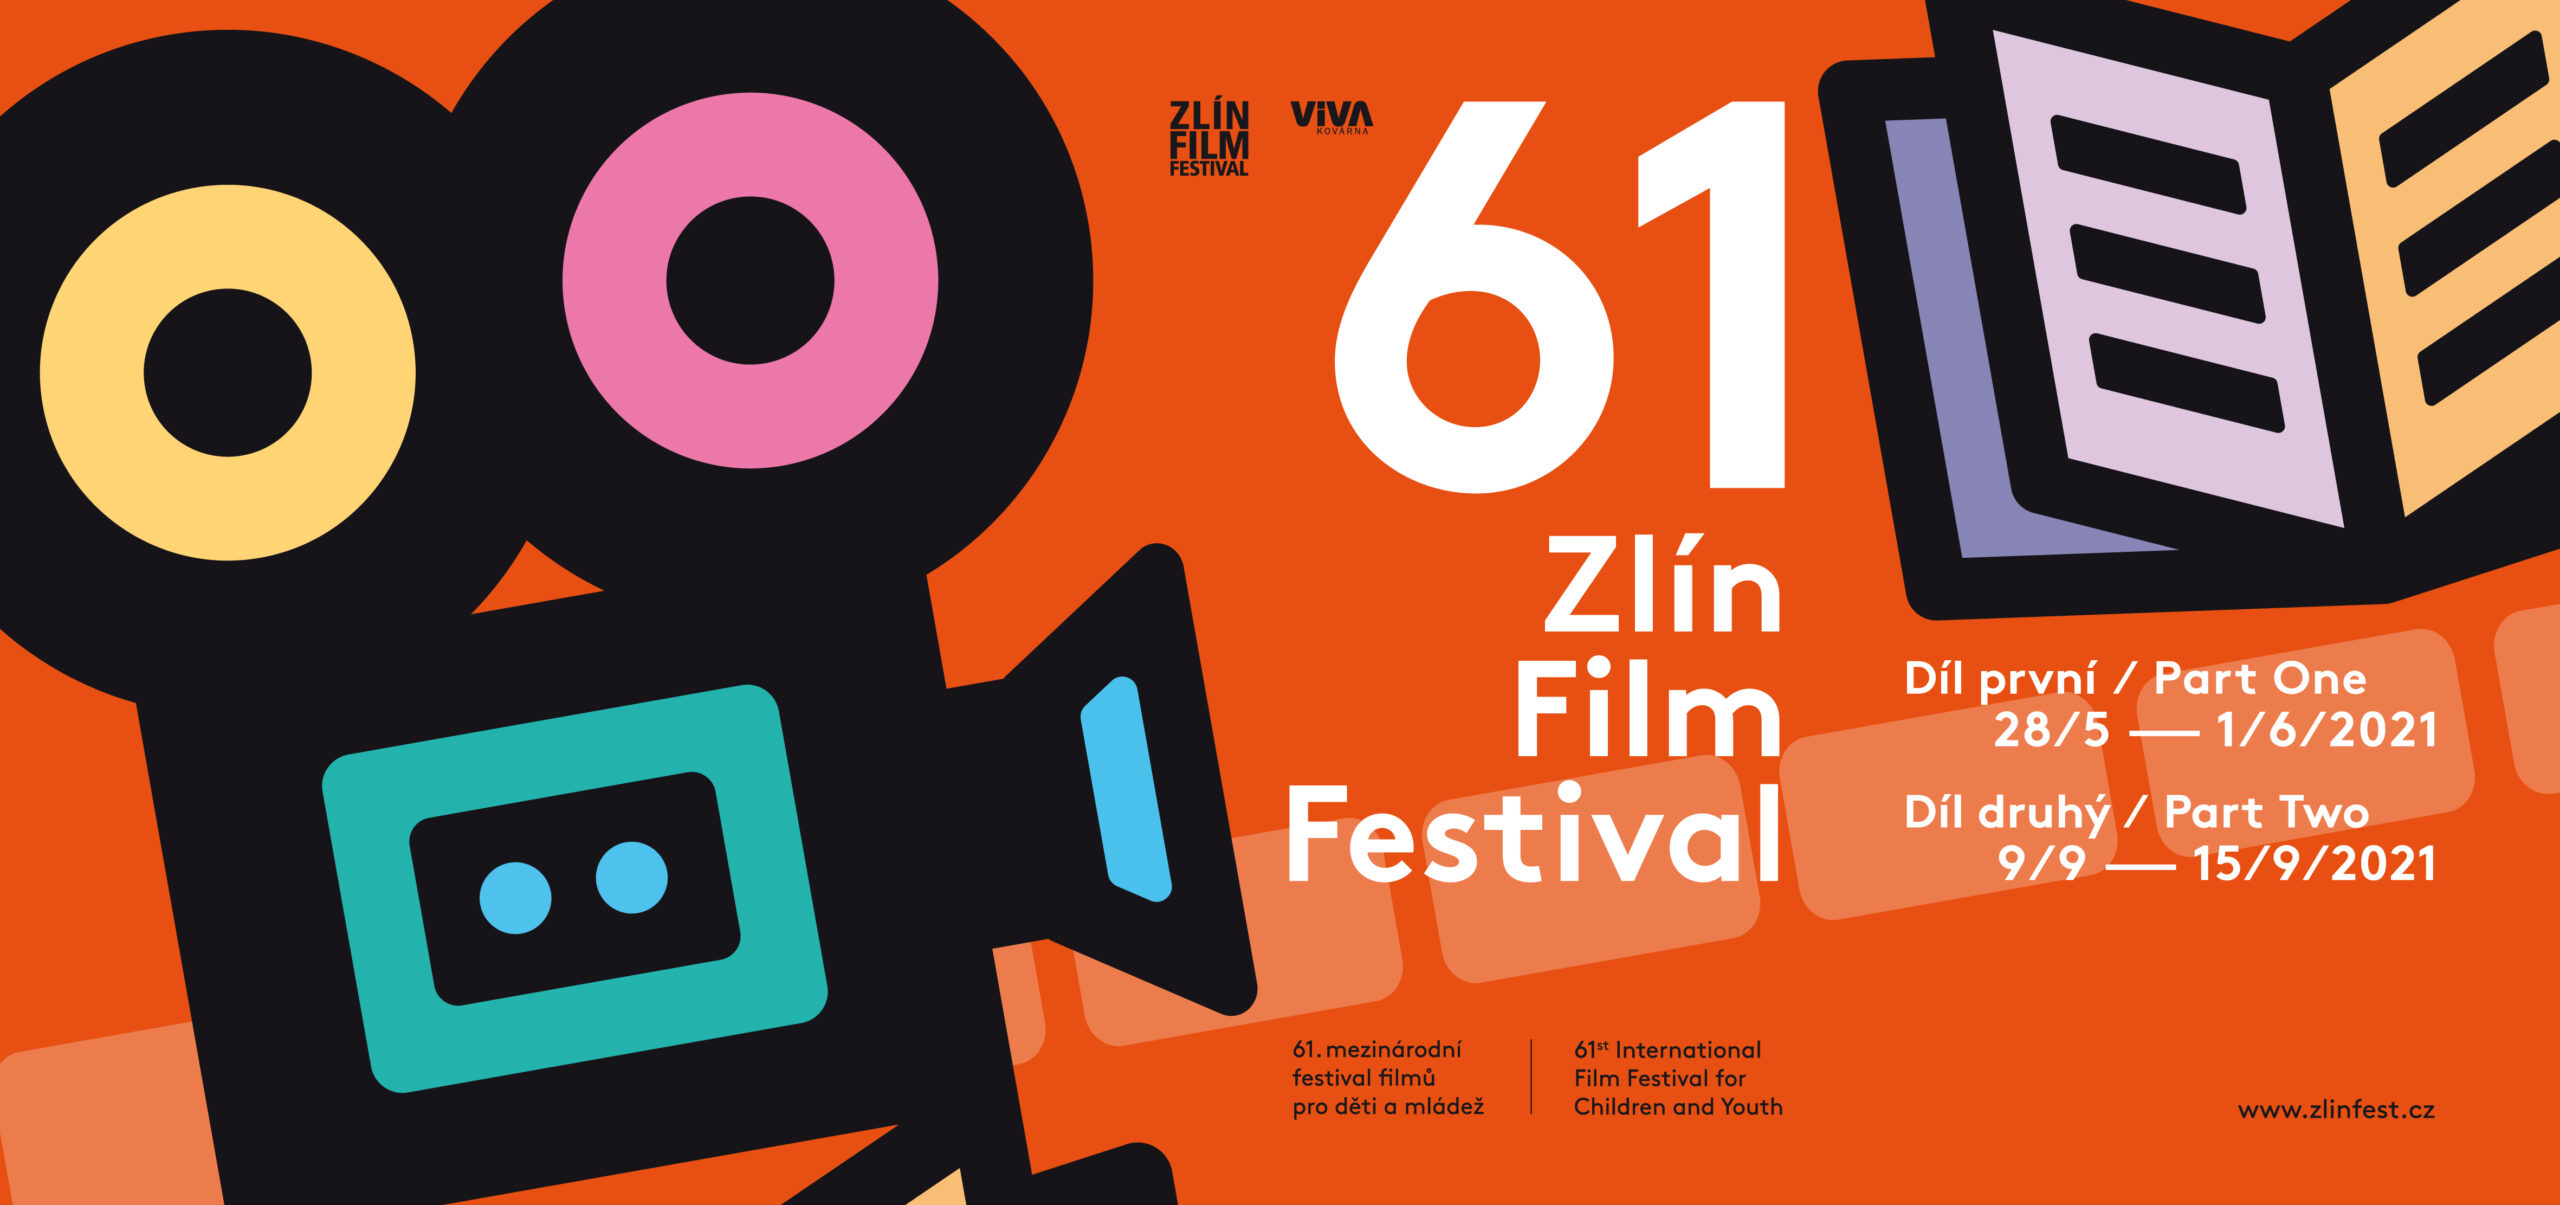 61. Zlin Film Festival 2 scaled